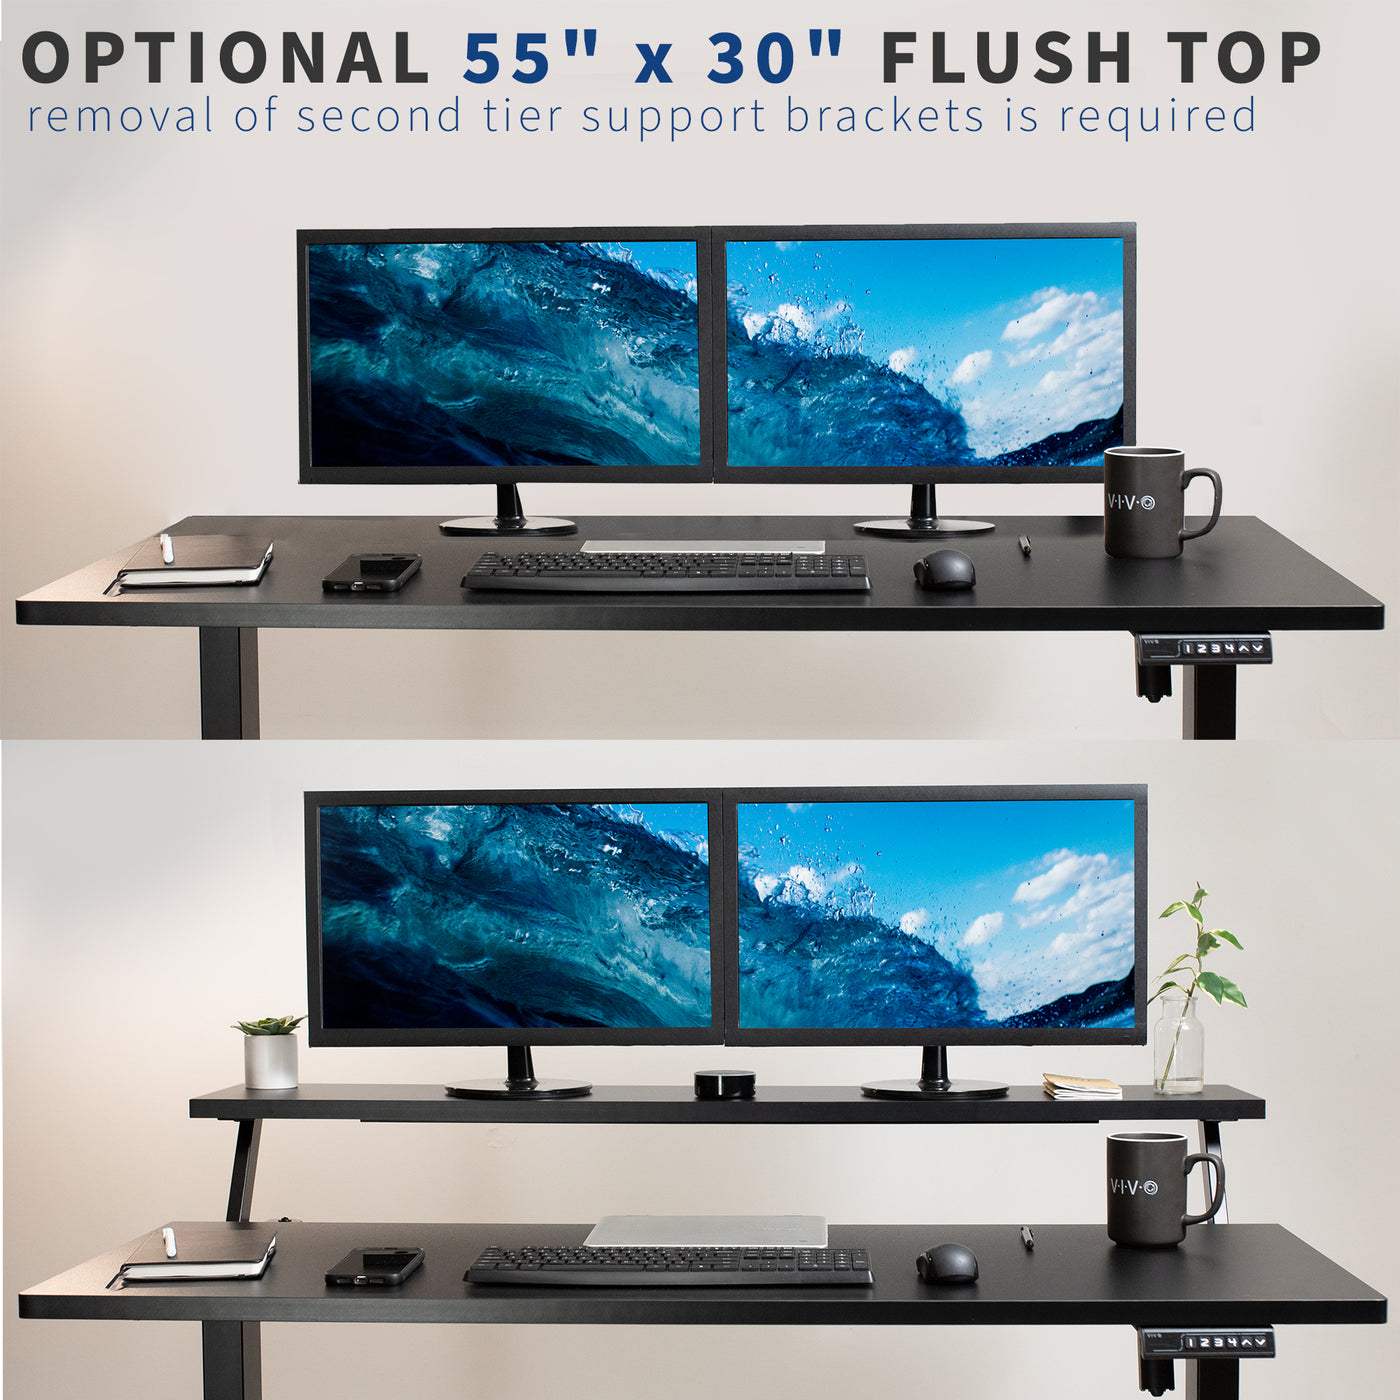 Heavy-duty adjustable sit or stand dual tier ergonomic office desk workstation.